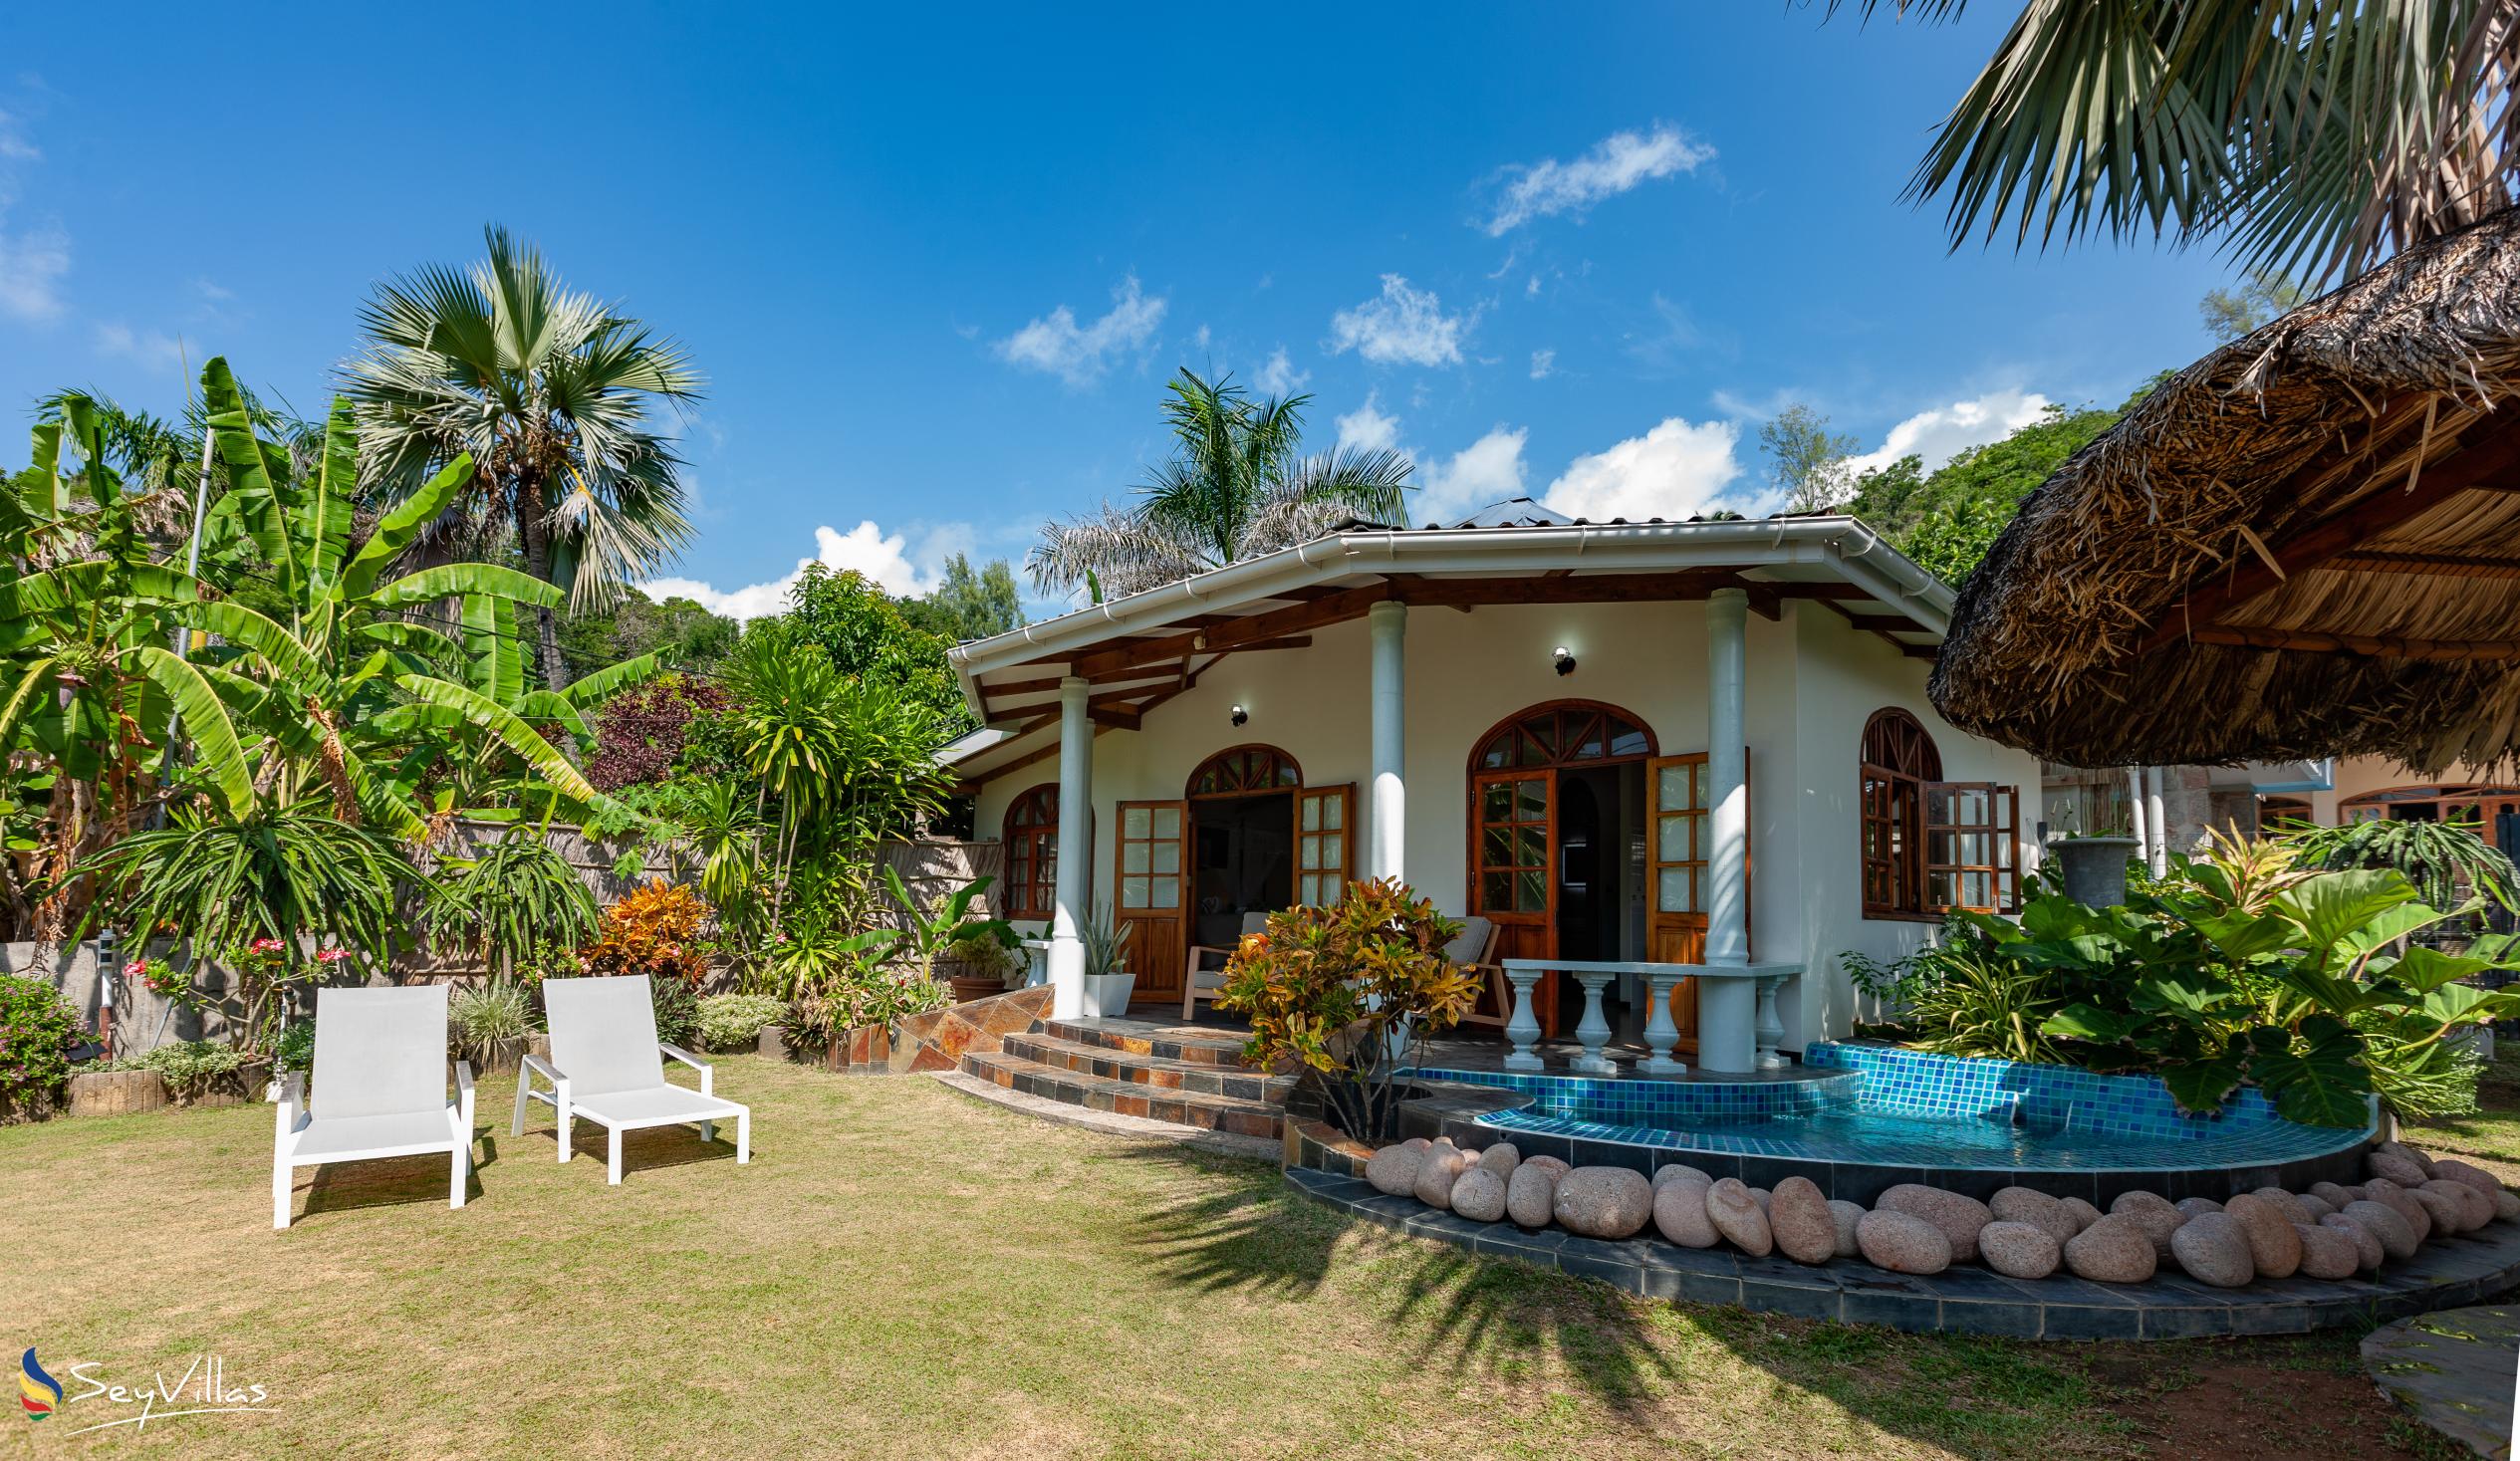 Photo 3: La Petite Maison - Outdoor area - Praslin (Seychelles)